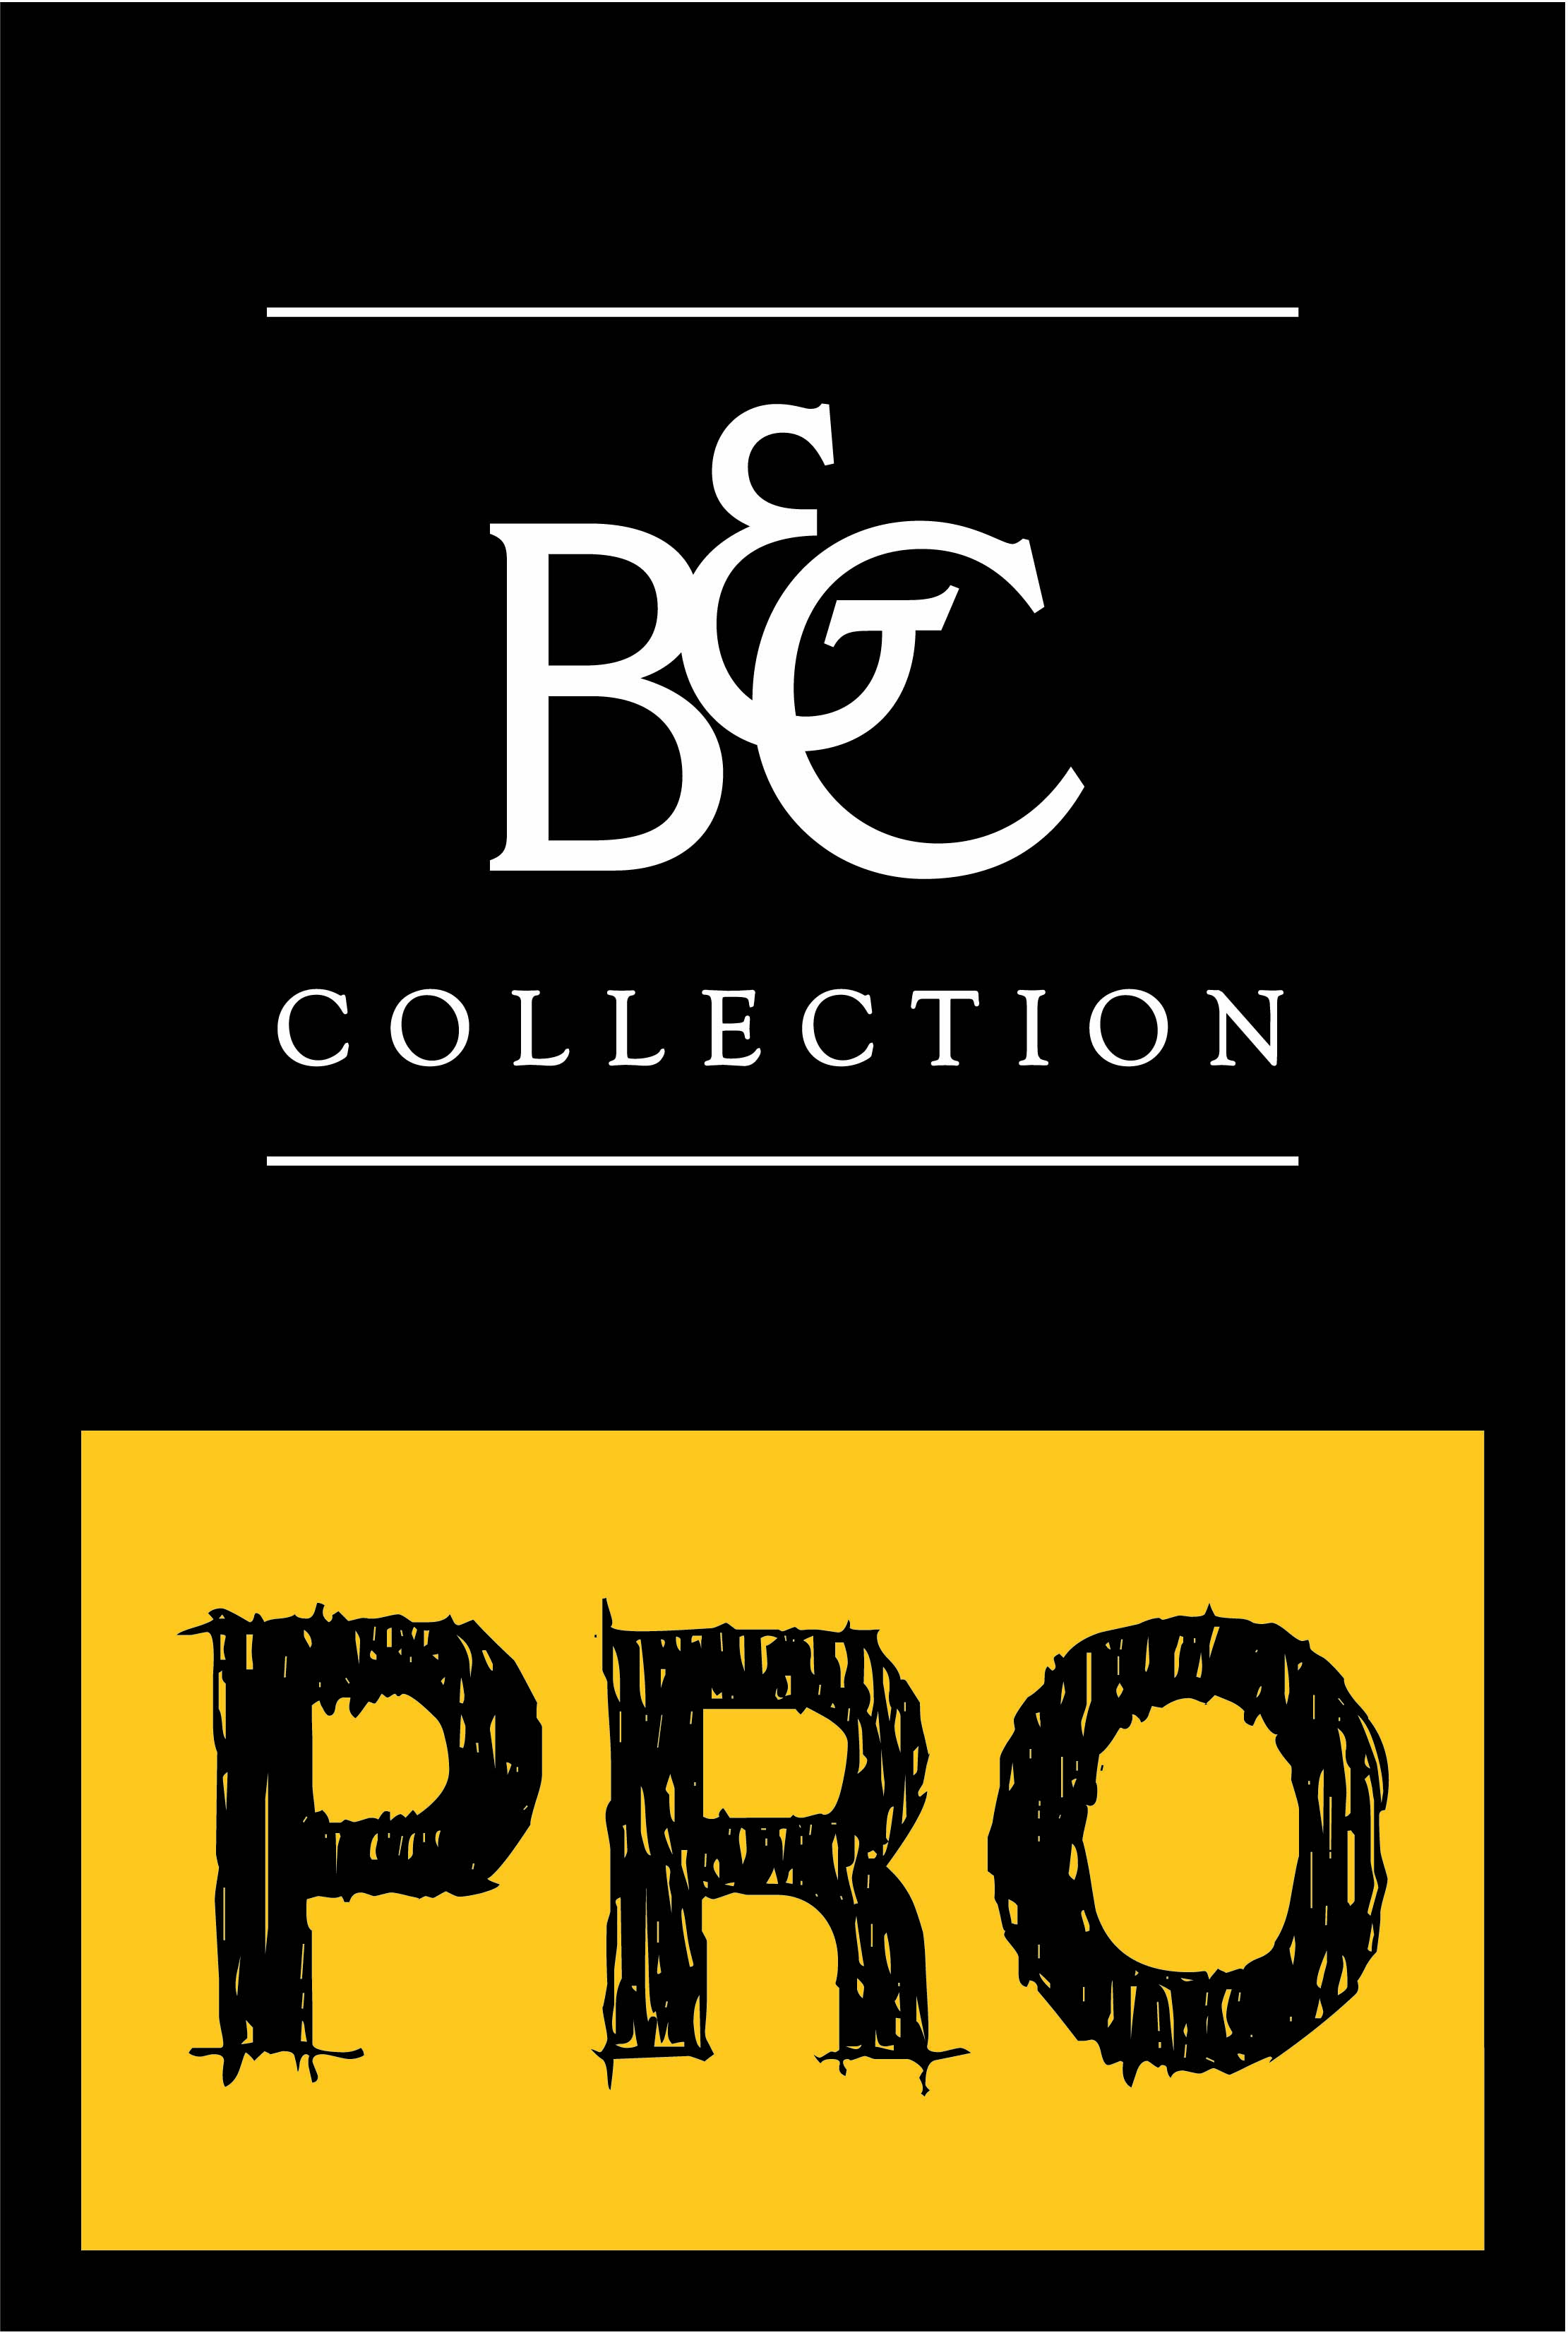 Expert Pro Bodywarmer - BCJUC40 - B&C Pro Collection